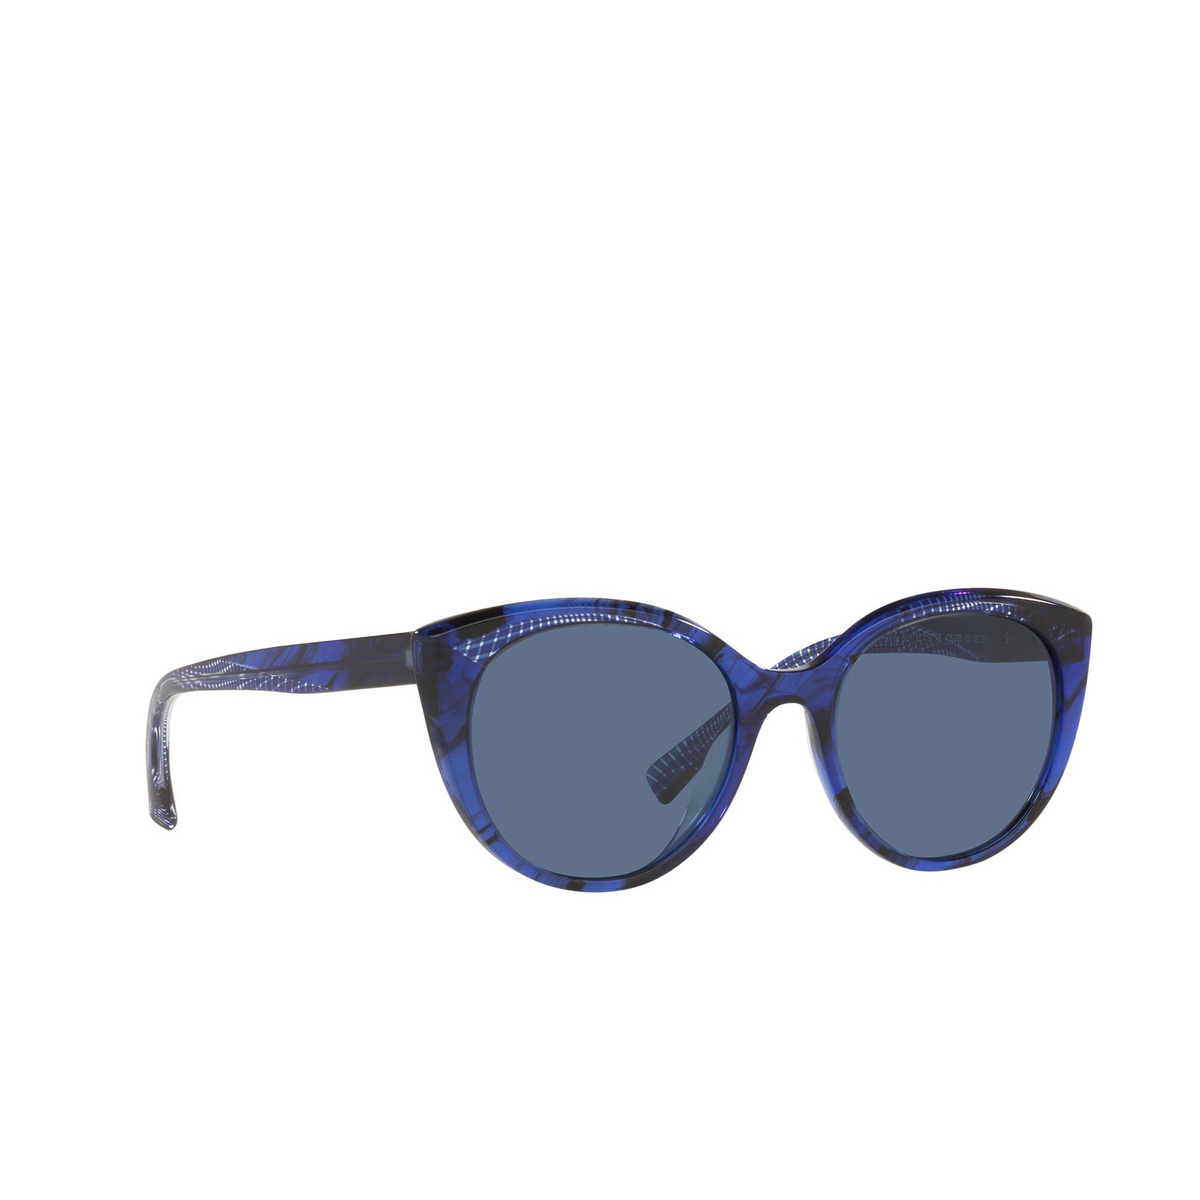 Alain Mikli® Cat-eye Sunglasses: Elinetta Sun A05066 color Fluid Blue / Blue Crystal 001/80 - three-quarters view.